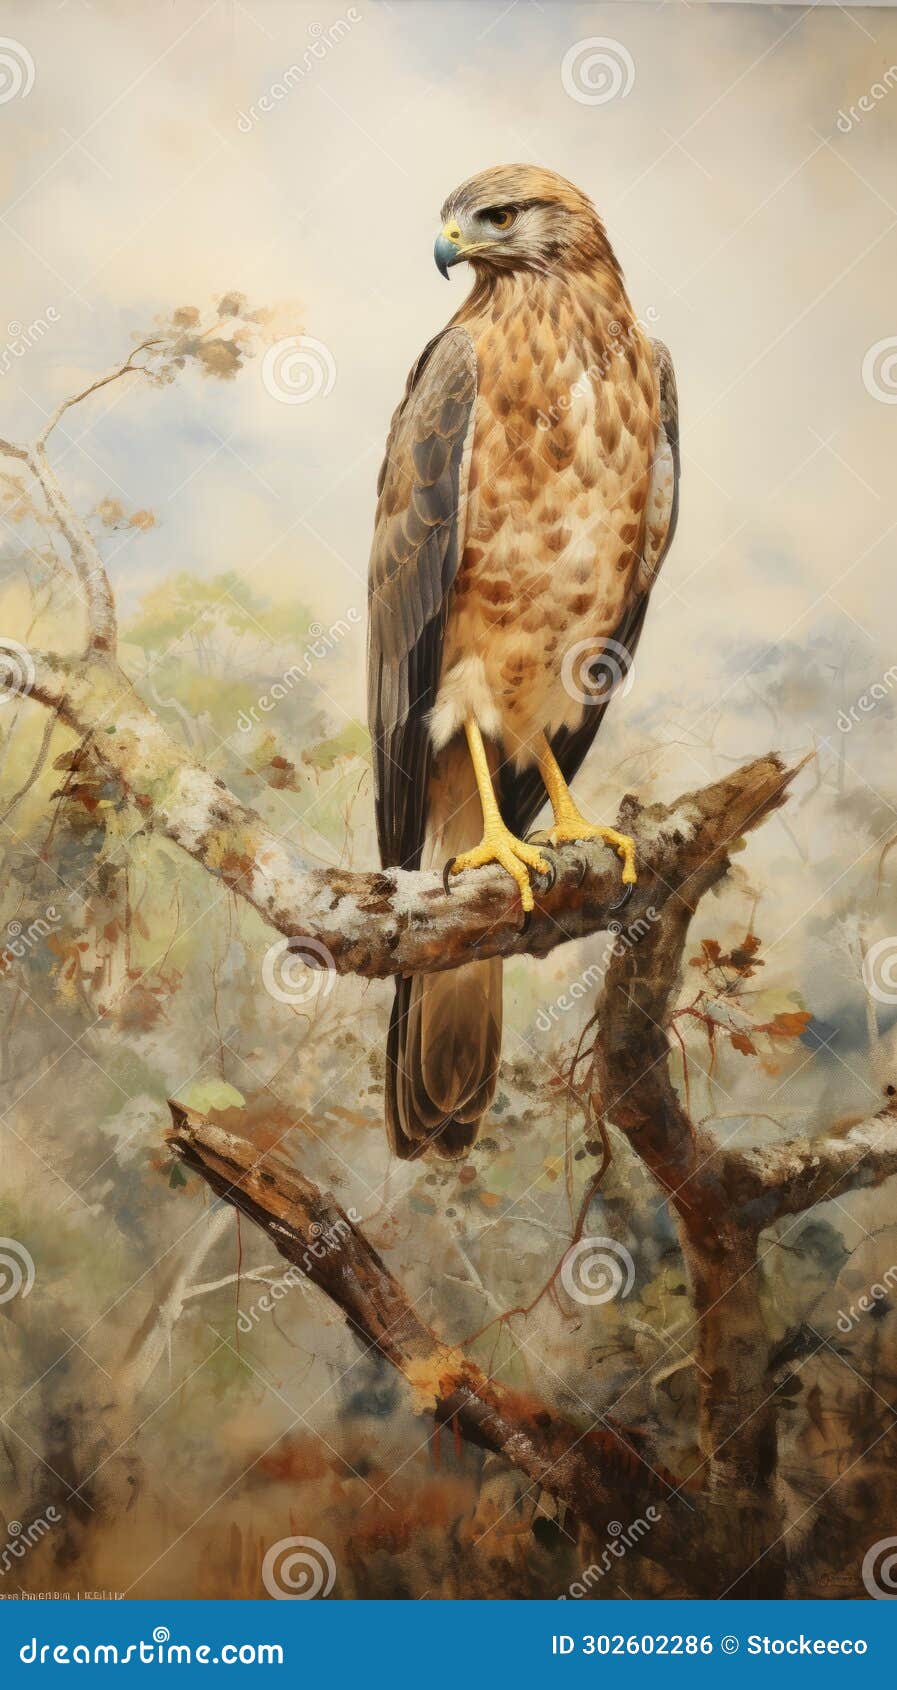 realist hawk painting on branch: detailed artwork by stephen shortridge, frank cadogan cowper, and david nordahl